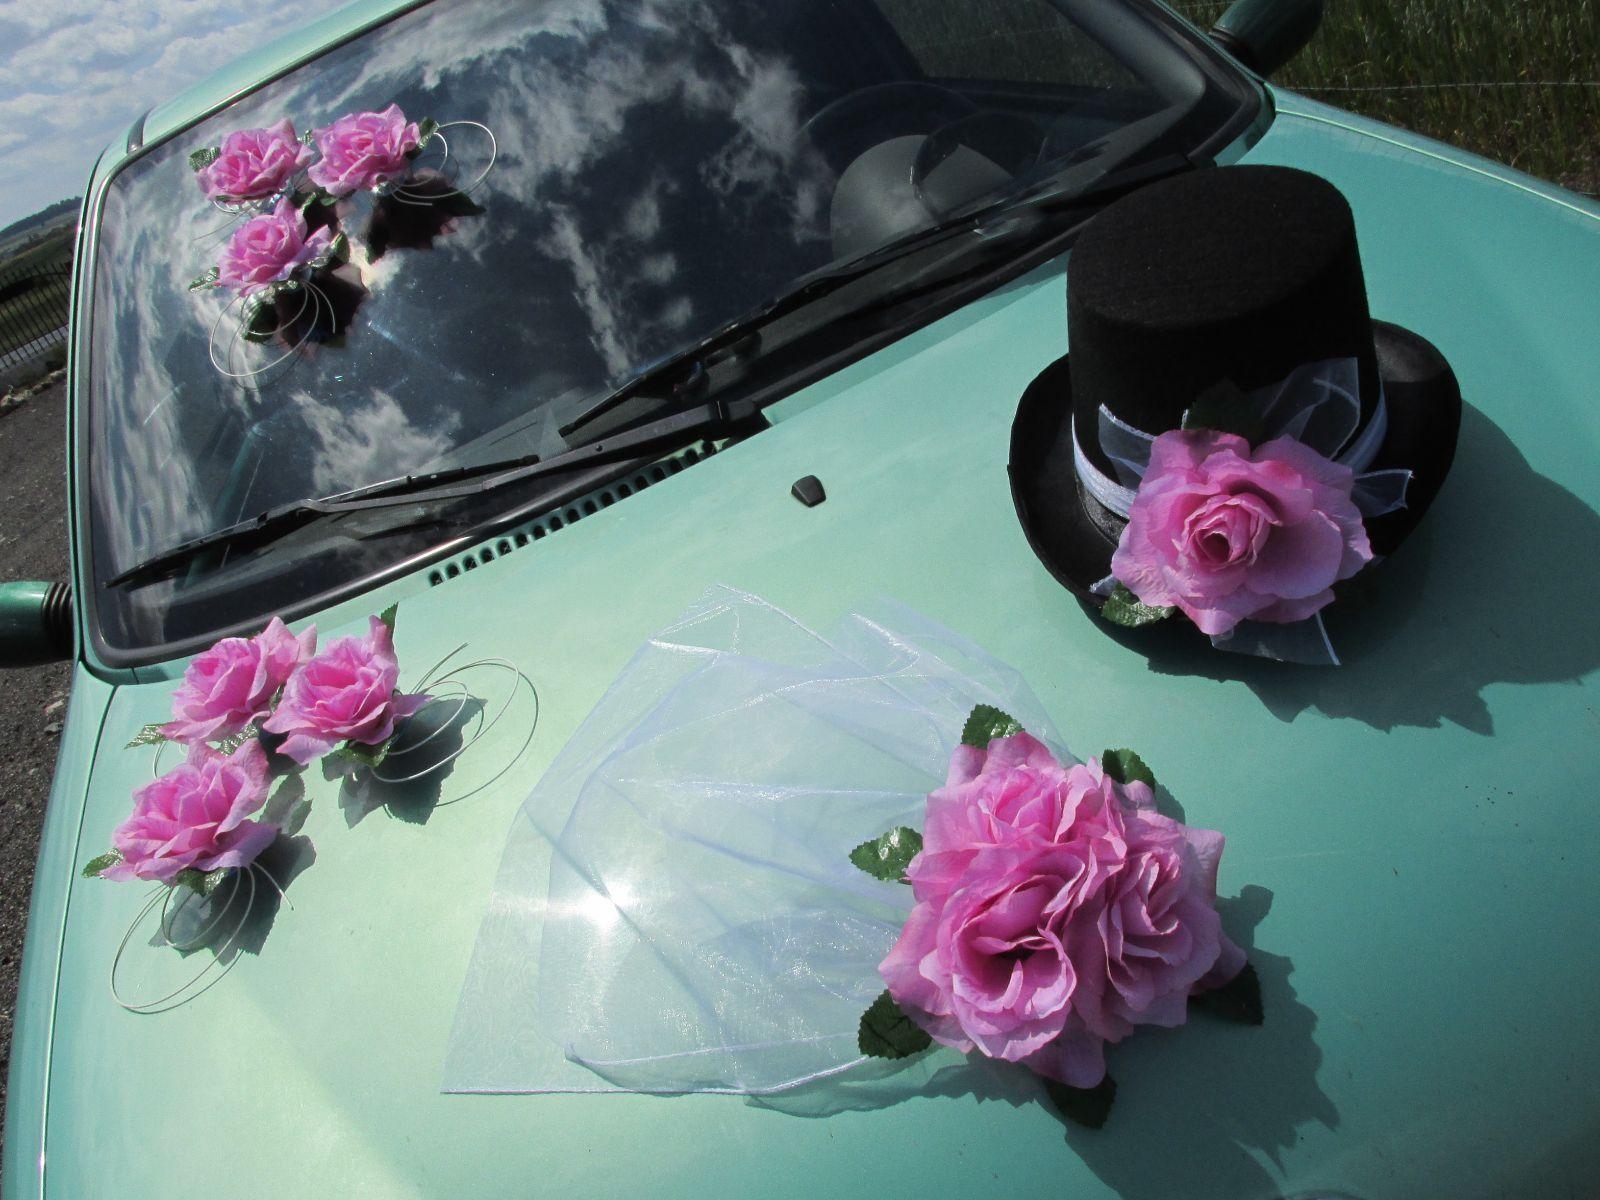 Svatební dekorace na auta